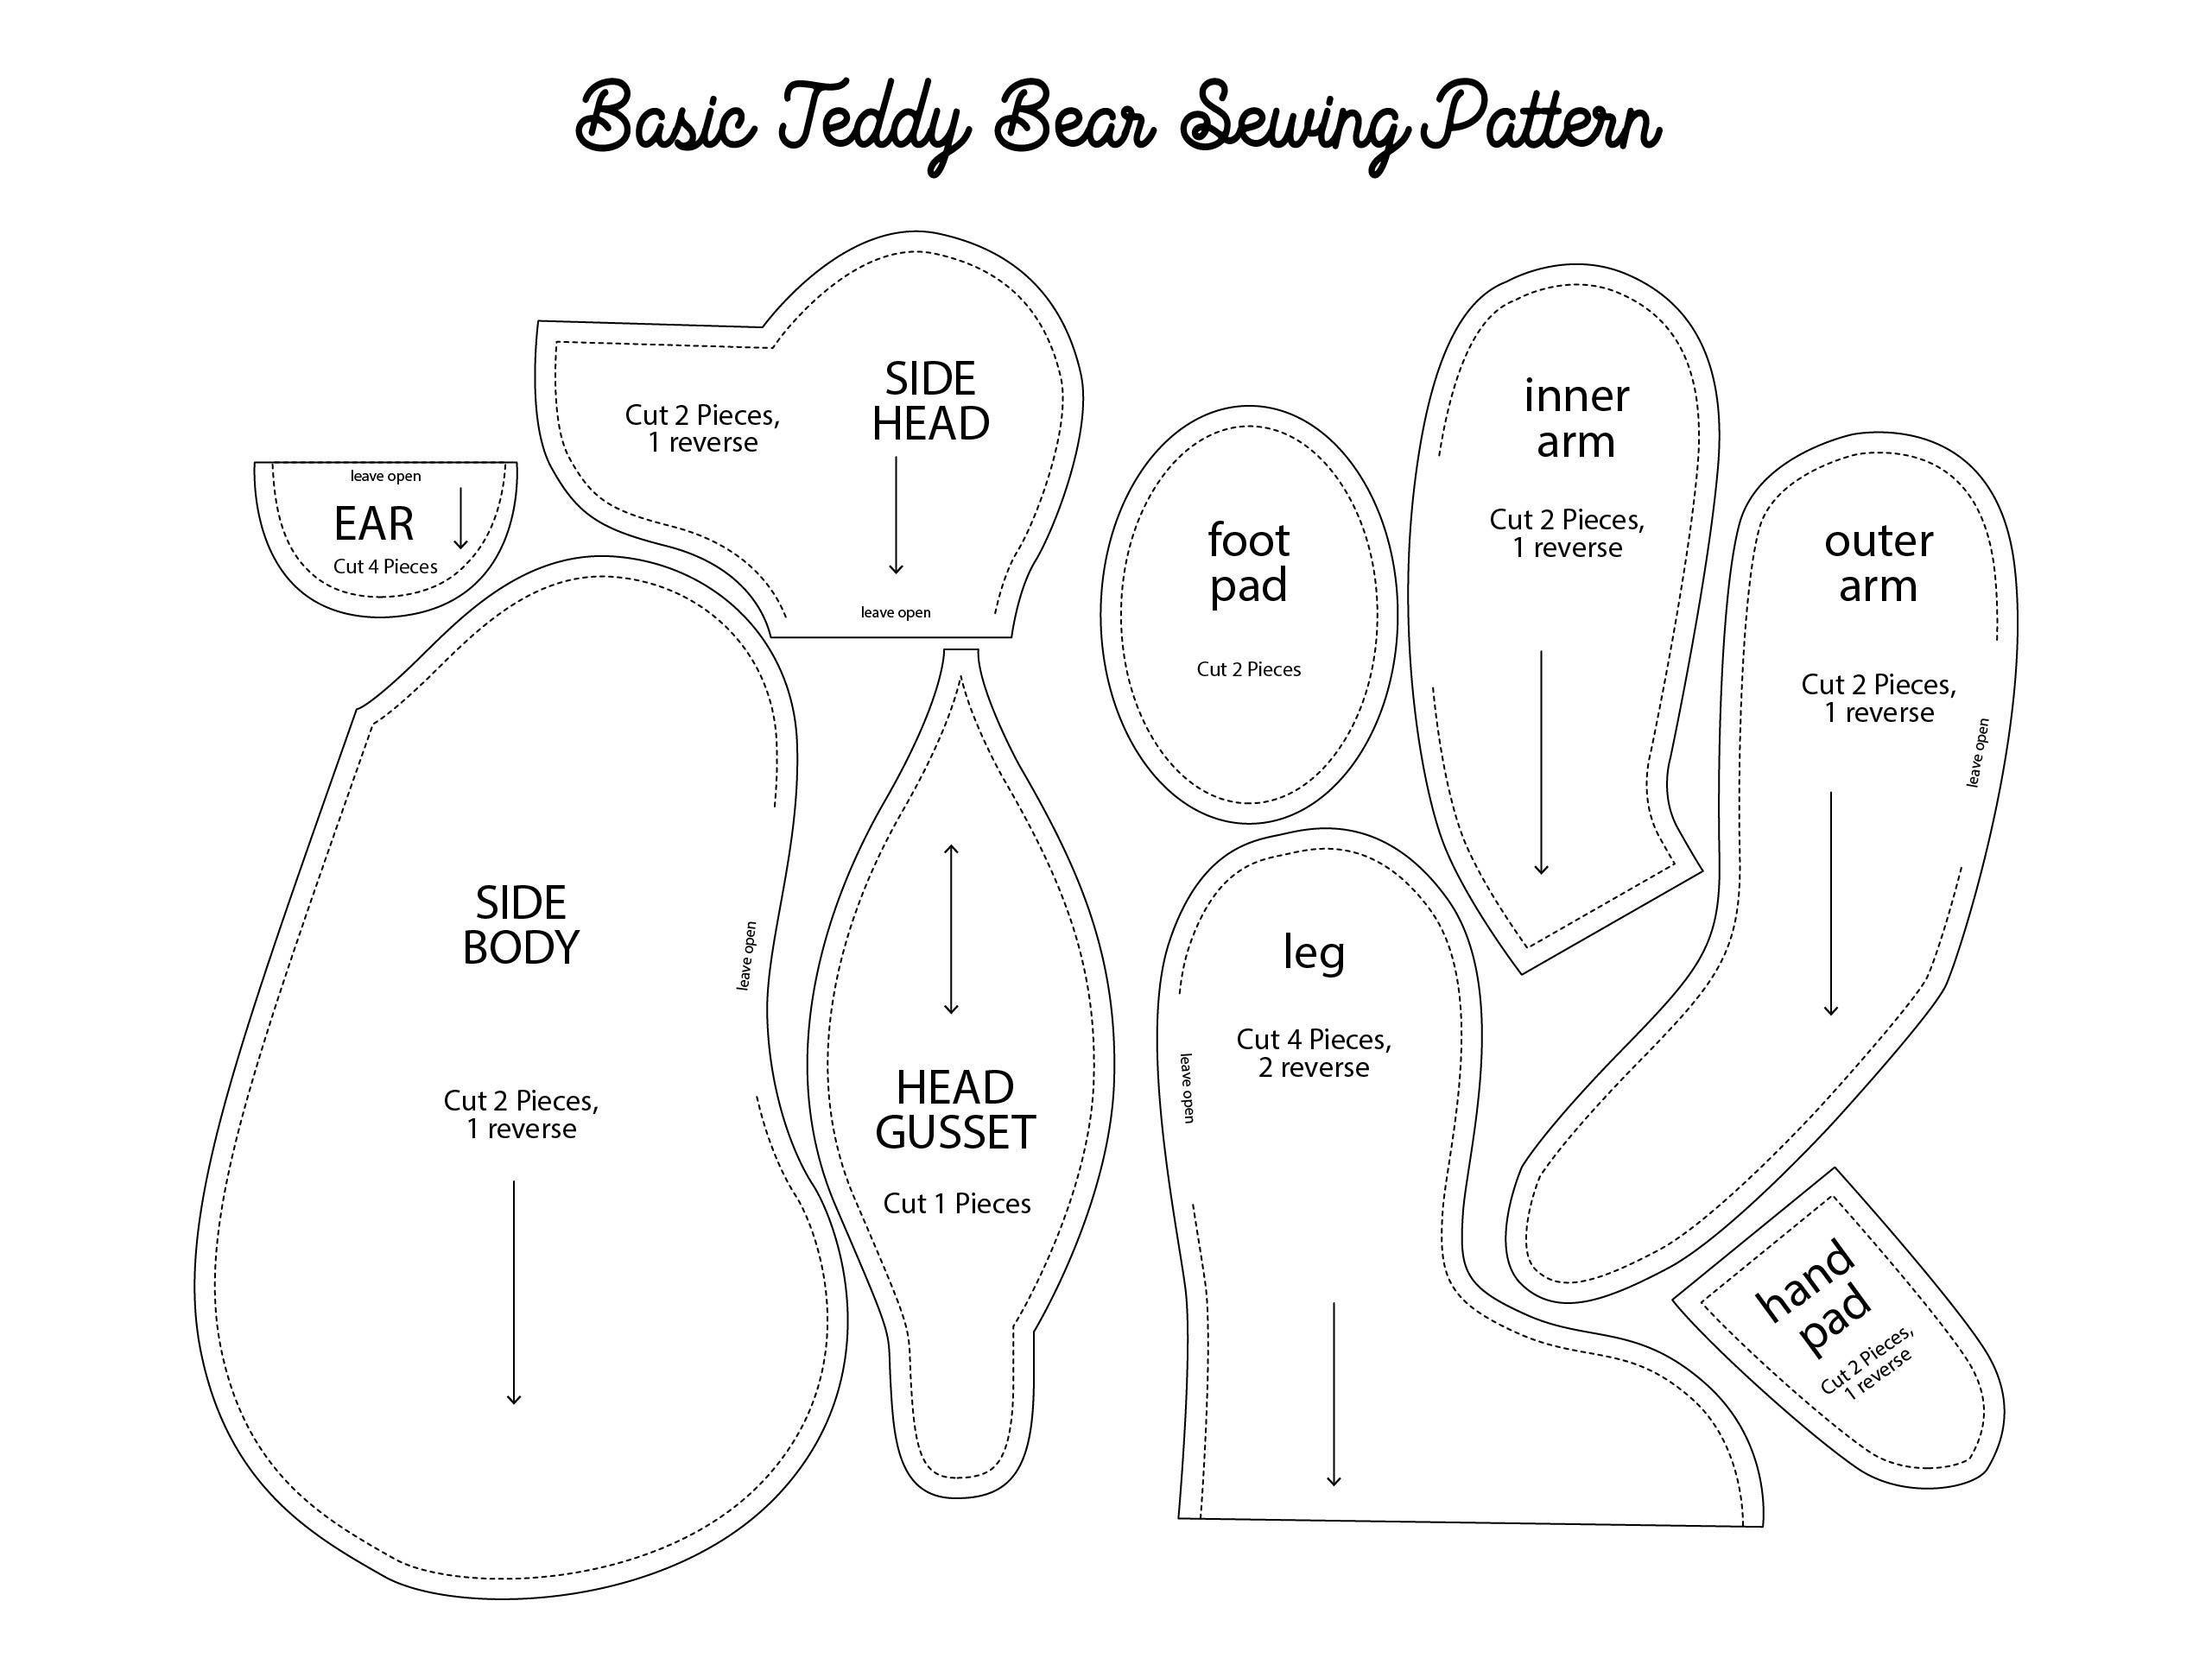 Printable Basic Teddy Bear Sewing Pattern | Teddy Bear Sewing - Free Printable Teddy Bear Sewing Patterns